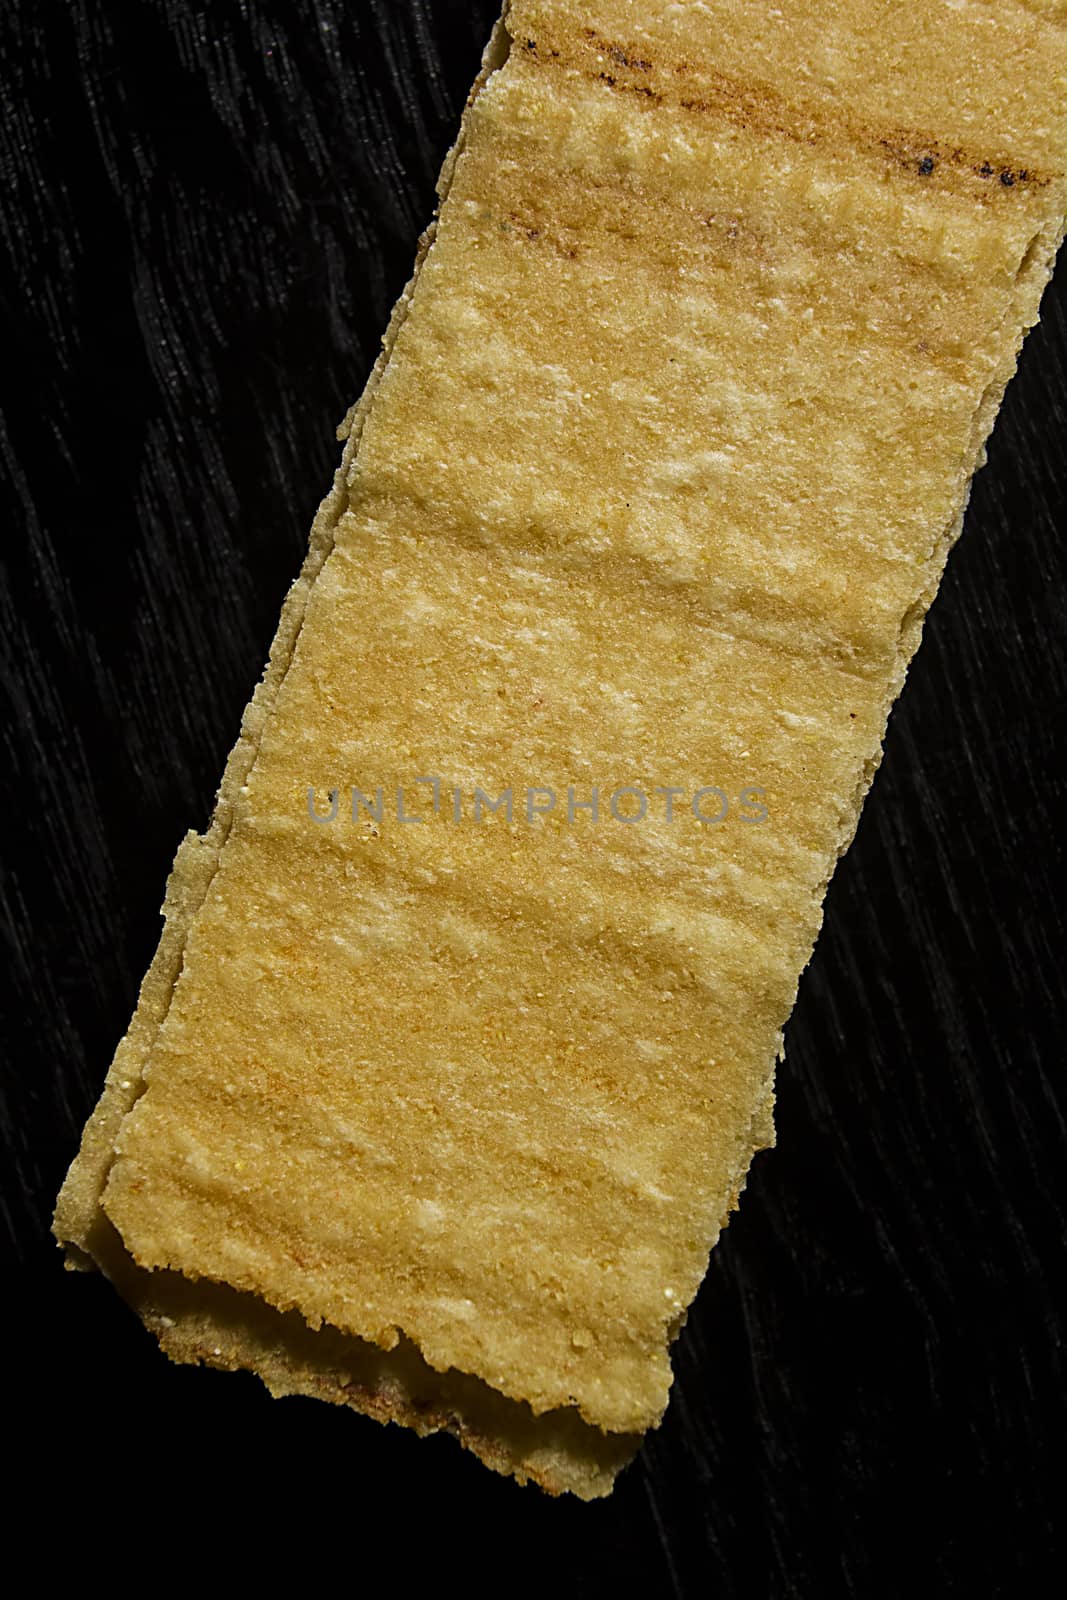 Rectangular potato chips on black wooden background